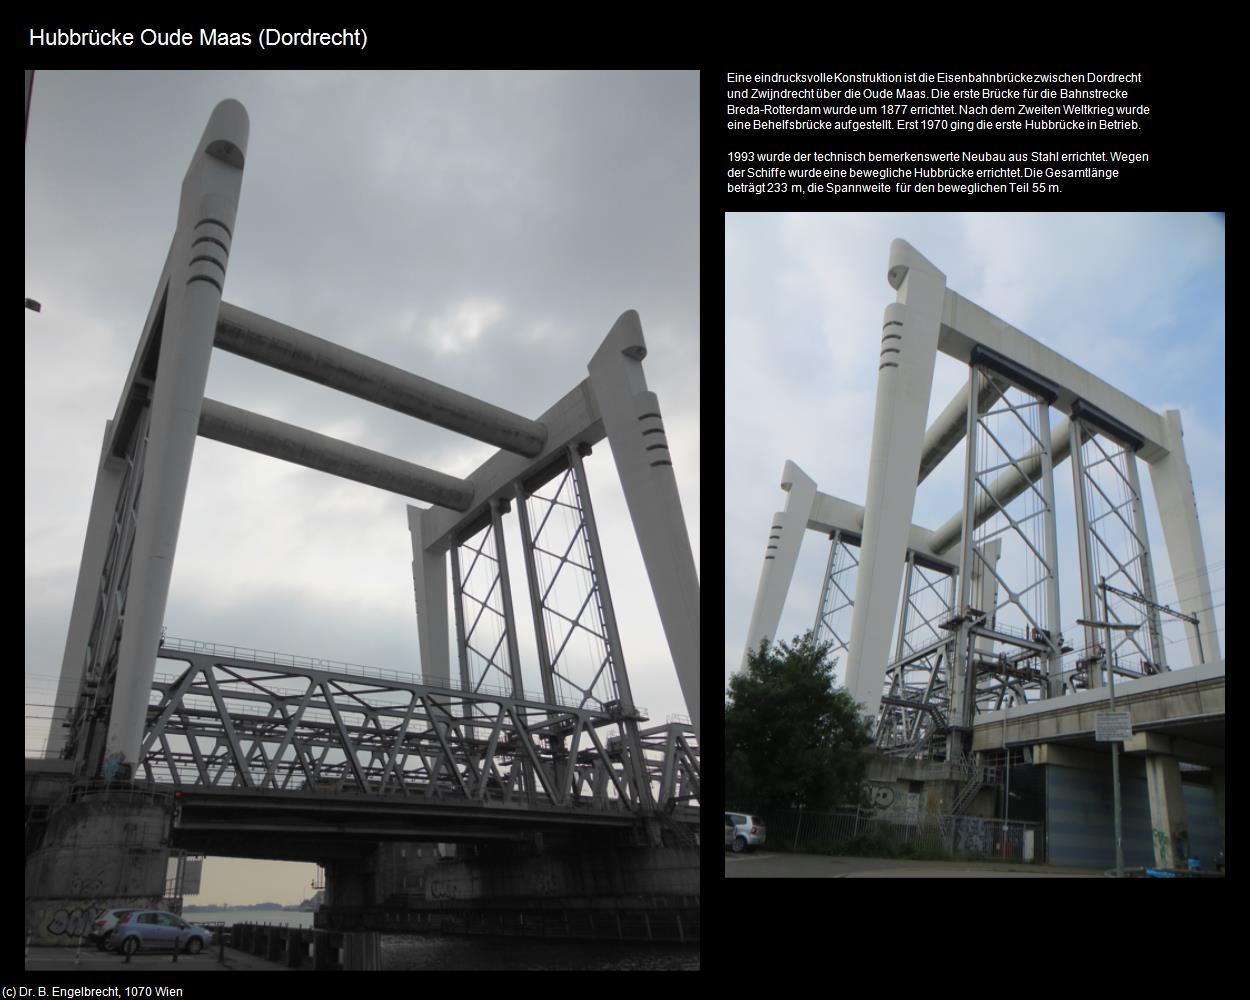 Hubbrücke Oude Maa (Dordrecht ) in Kulturatlas-NIEDERLANDE